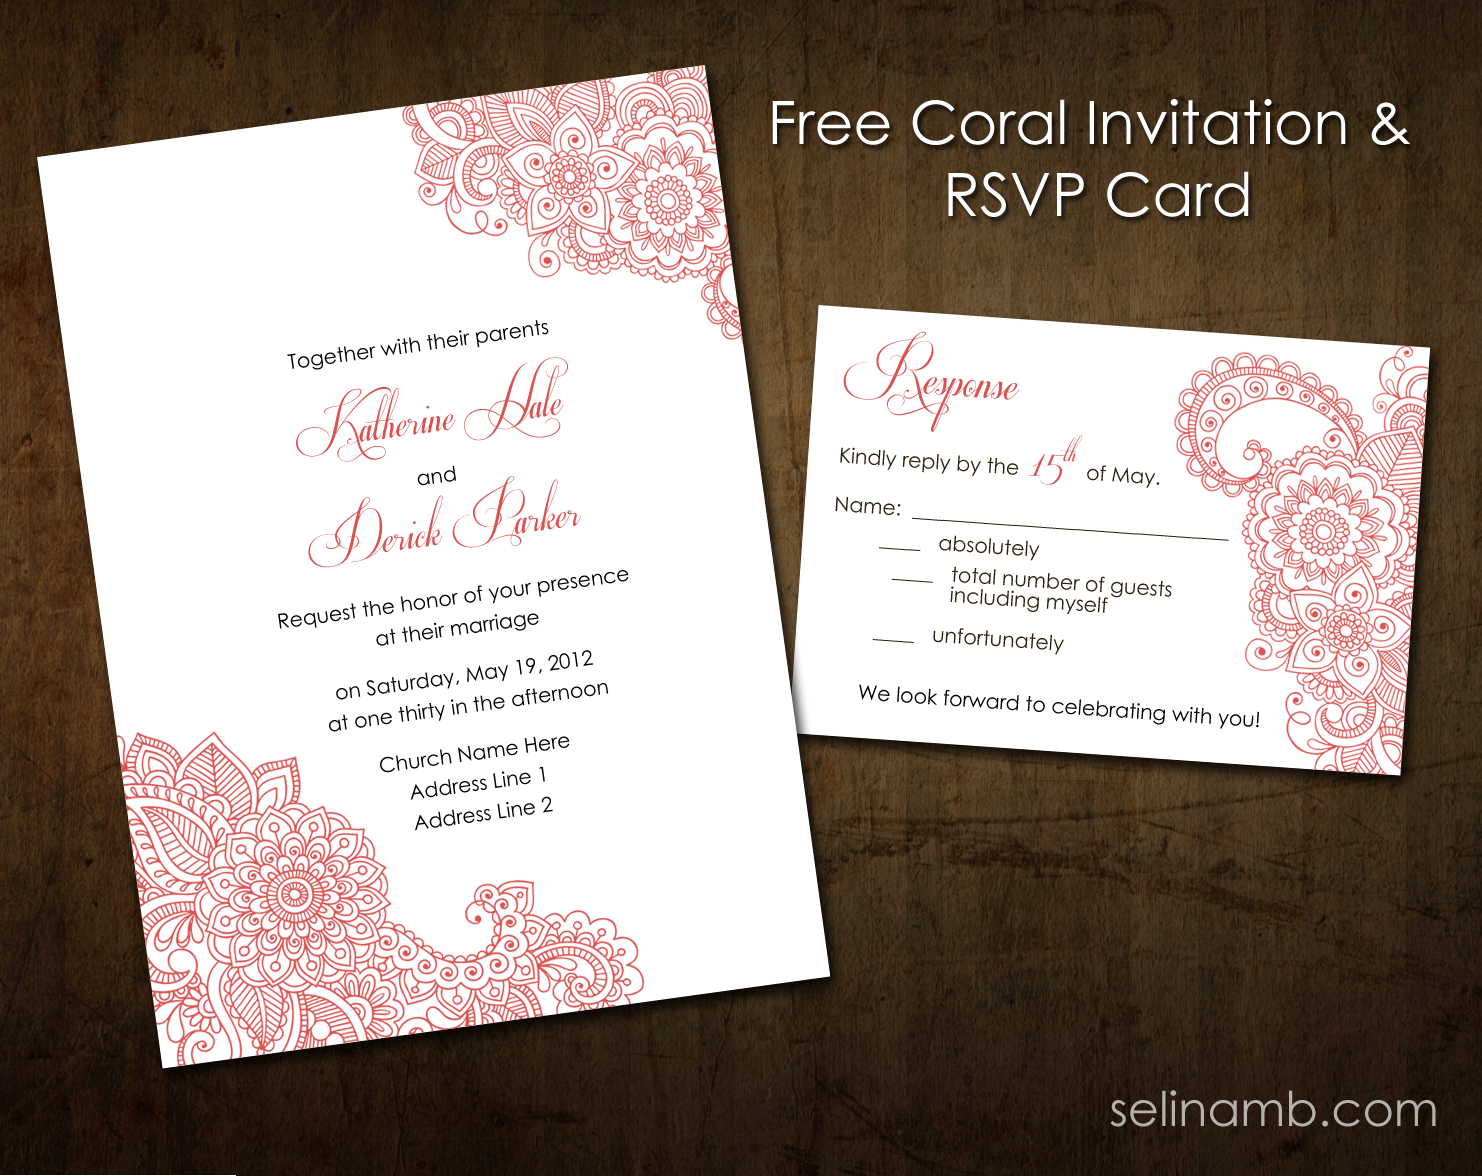 How to wedding invitation rsvp